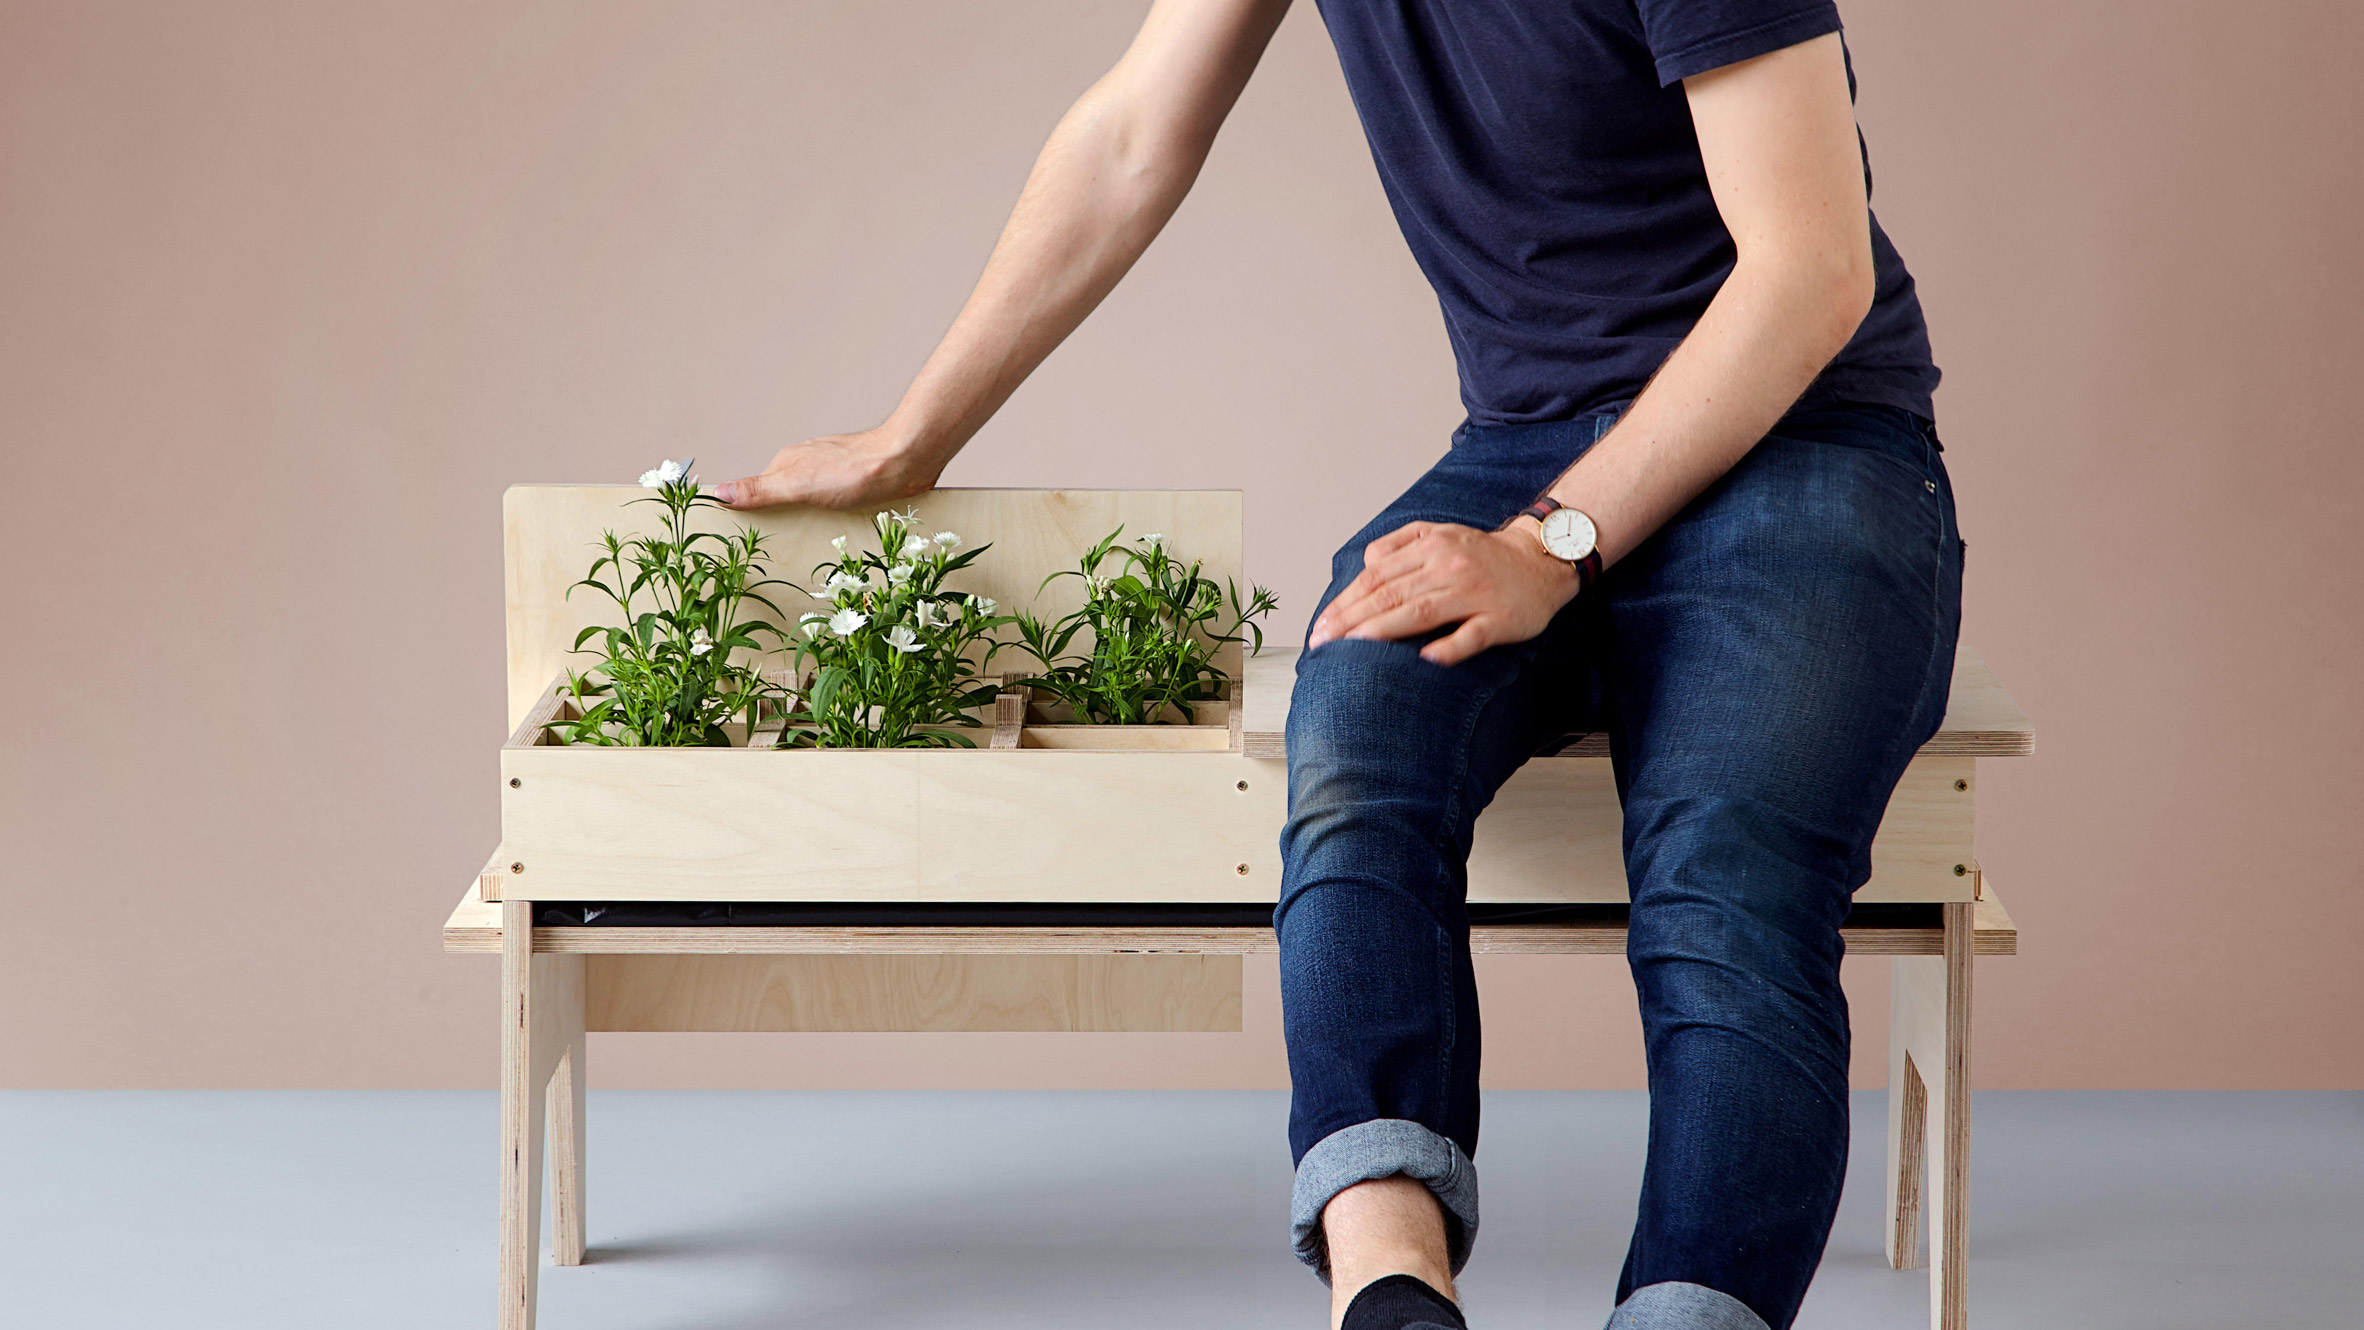 Florian creates "temporary gardens" in small spaces